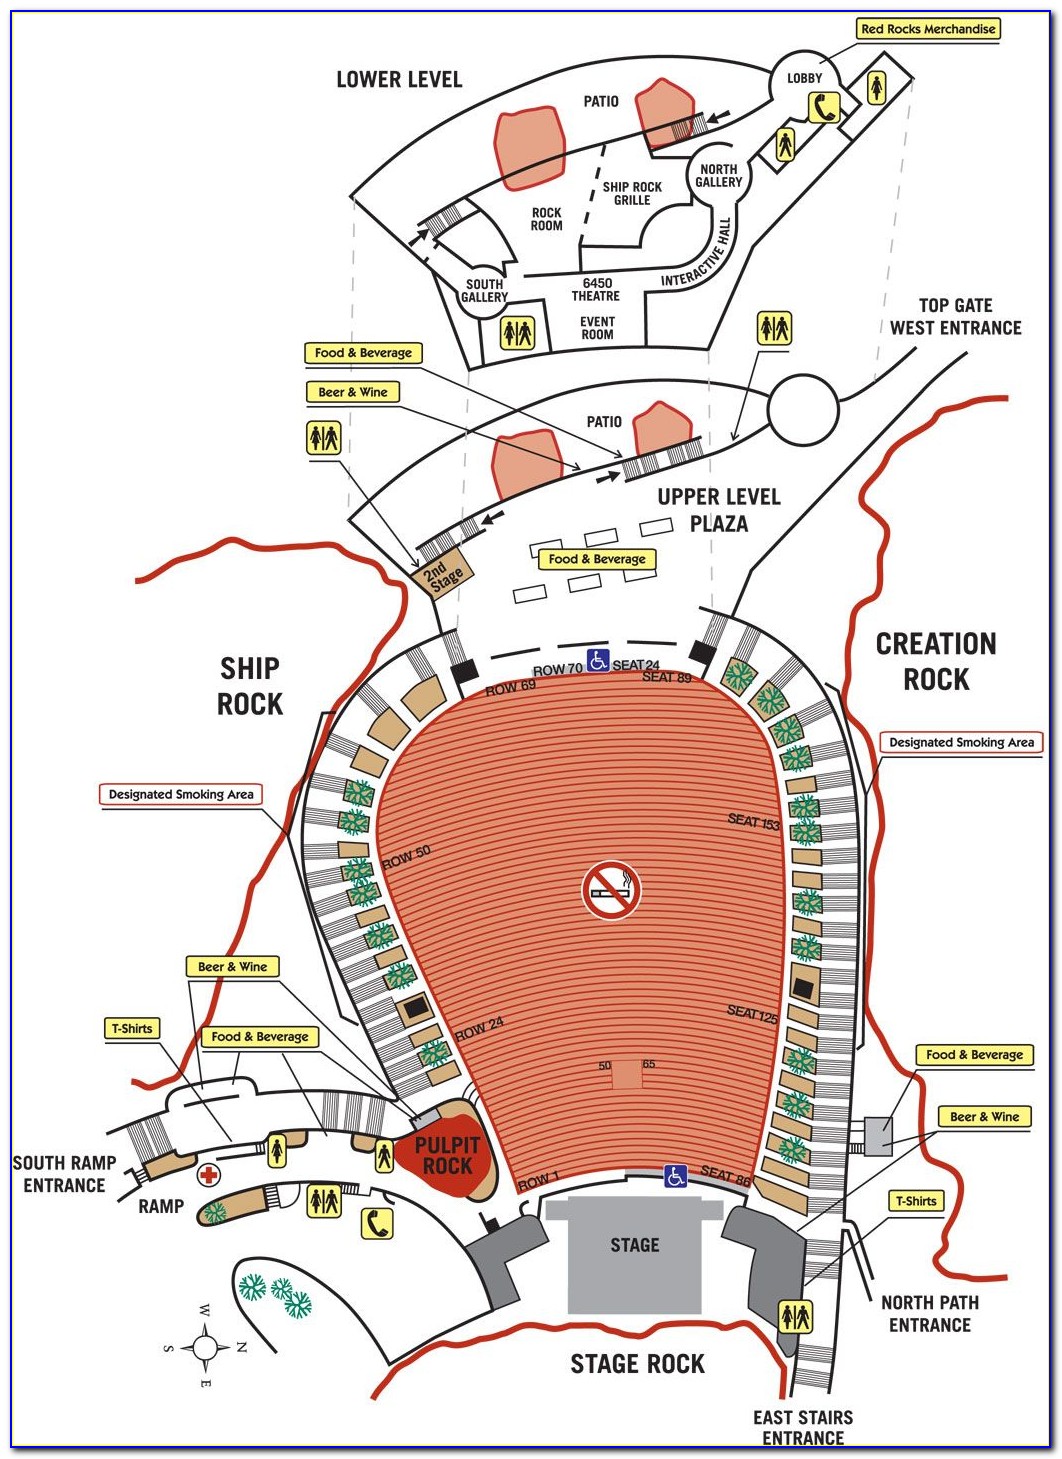 Red Rocks Amphitheater Map